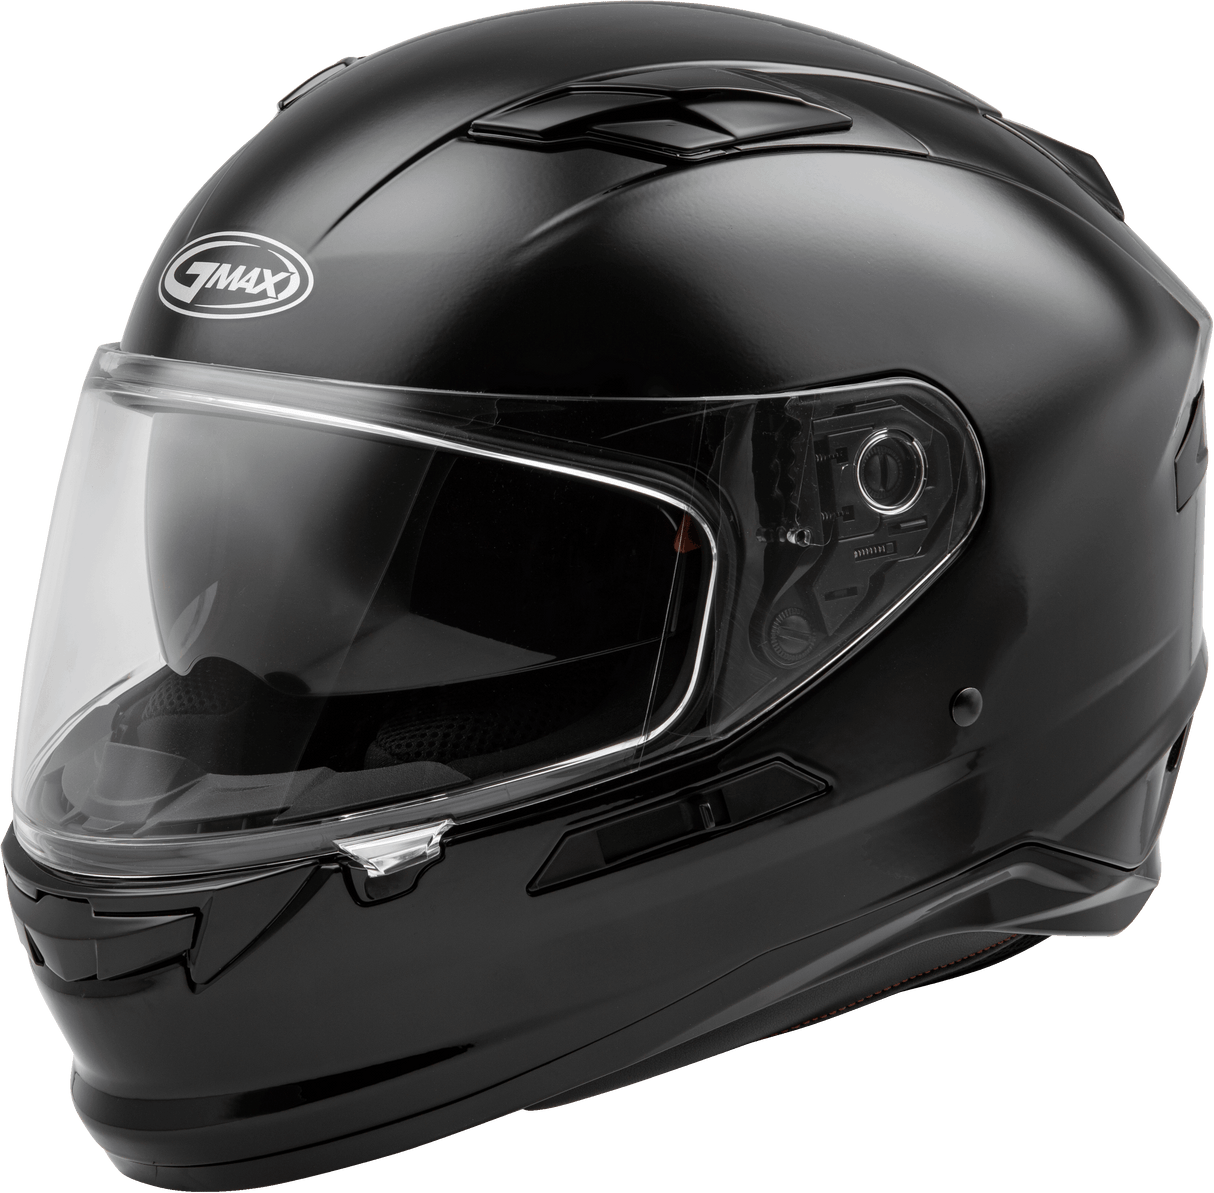 GMAX Ff 98 Full Face Helmet Black Xl for Powersports